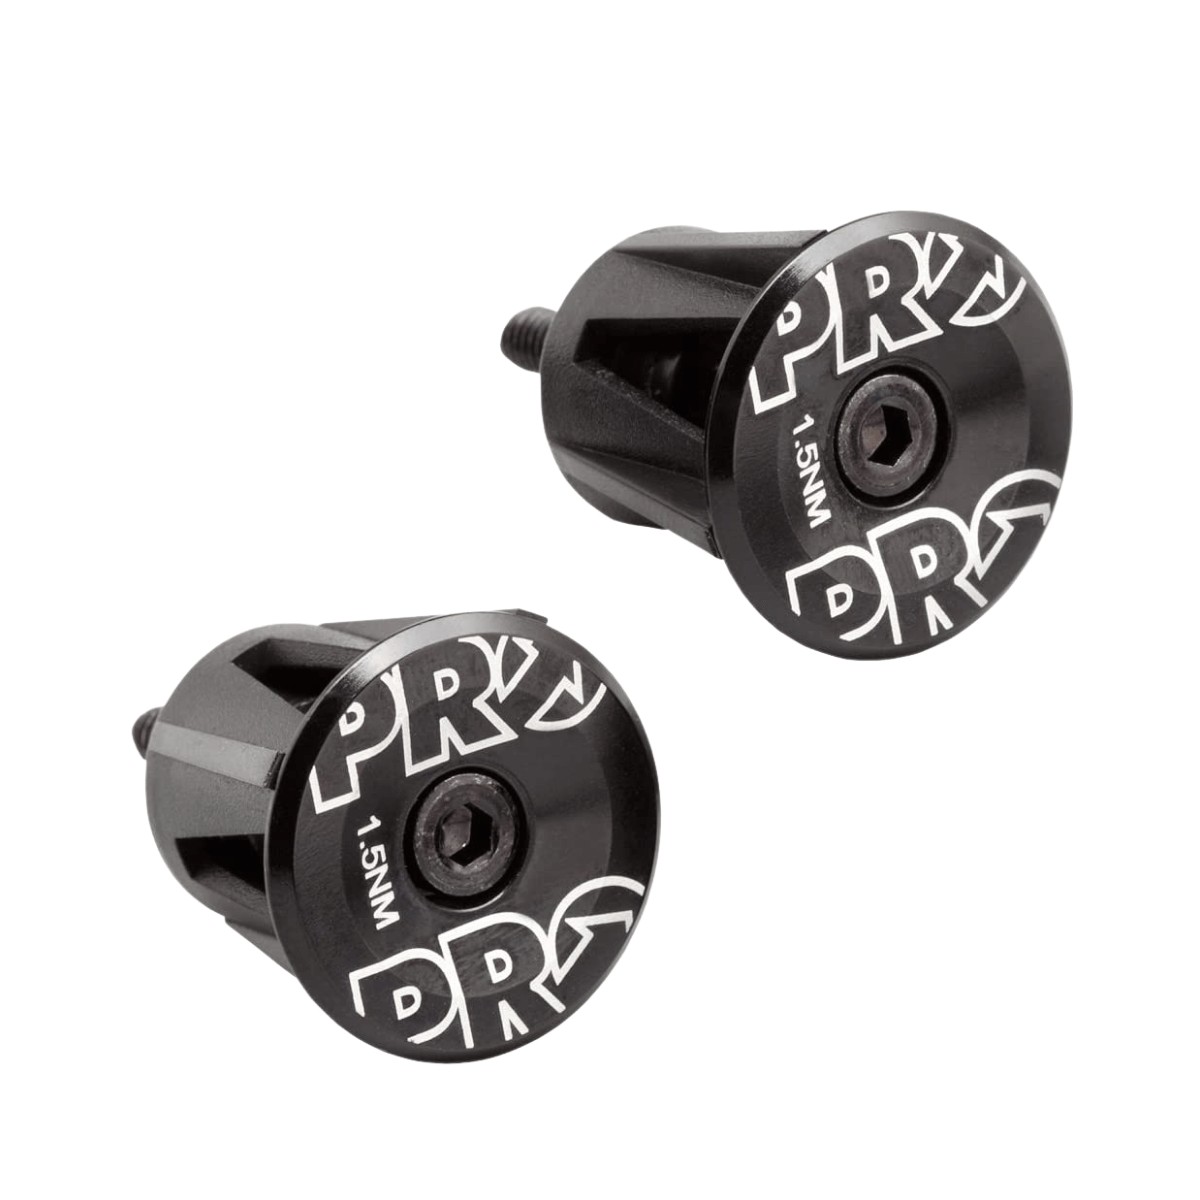 PRO black aluminum handlebar plugs